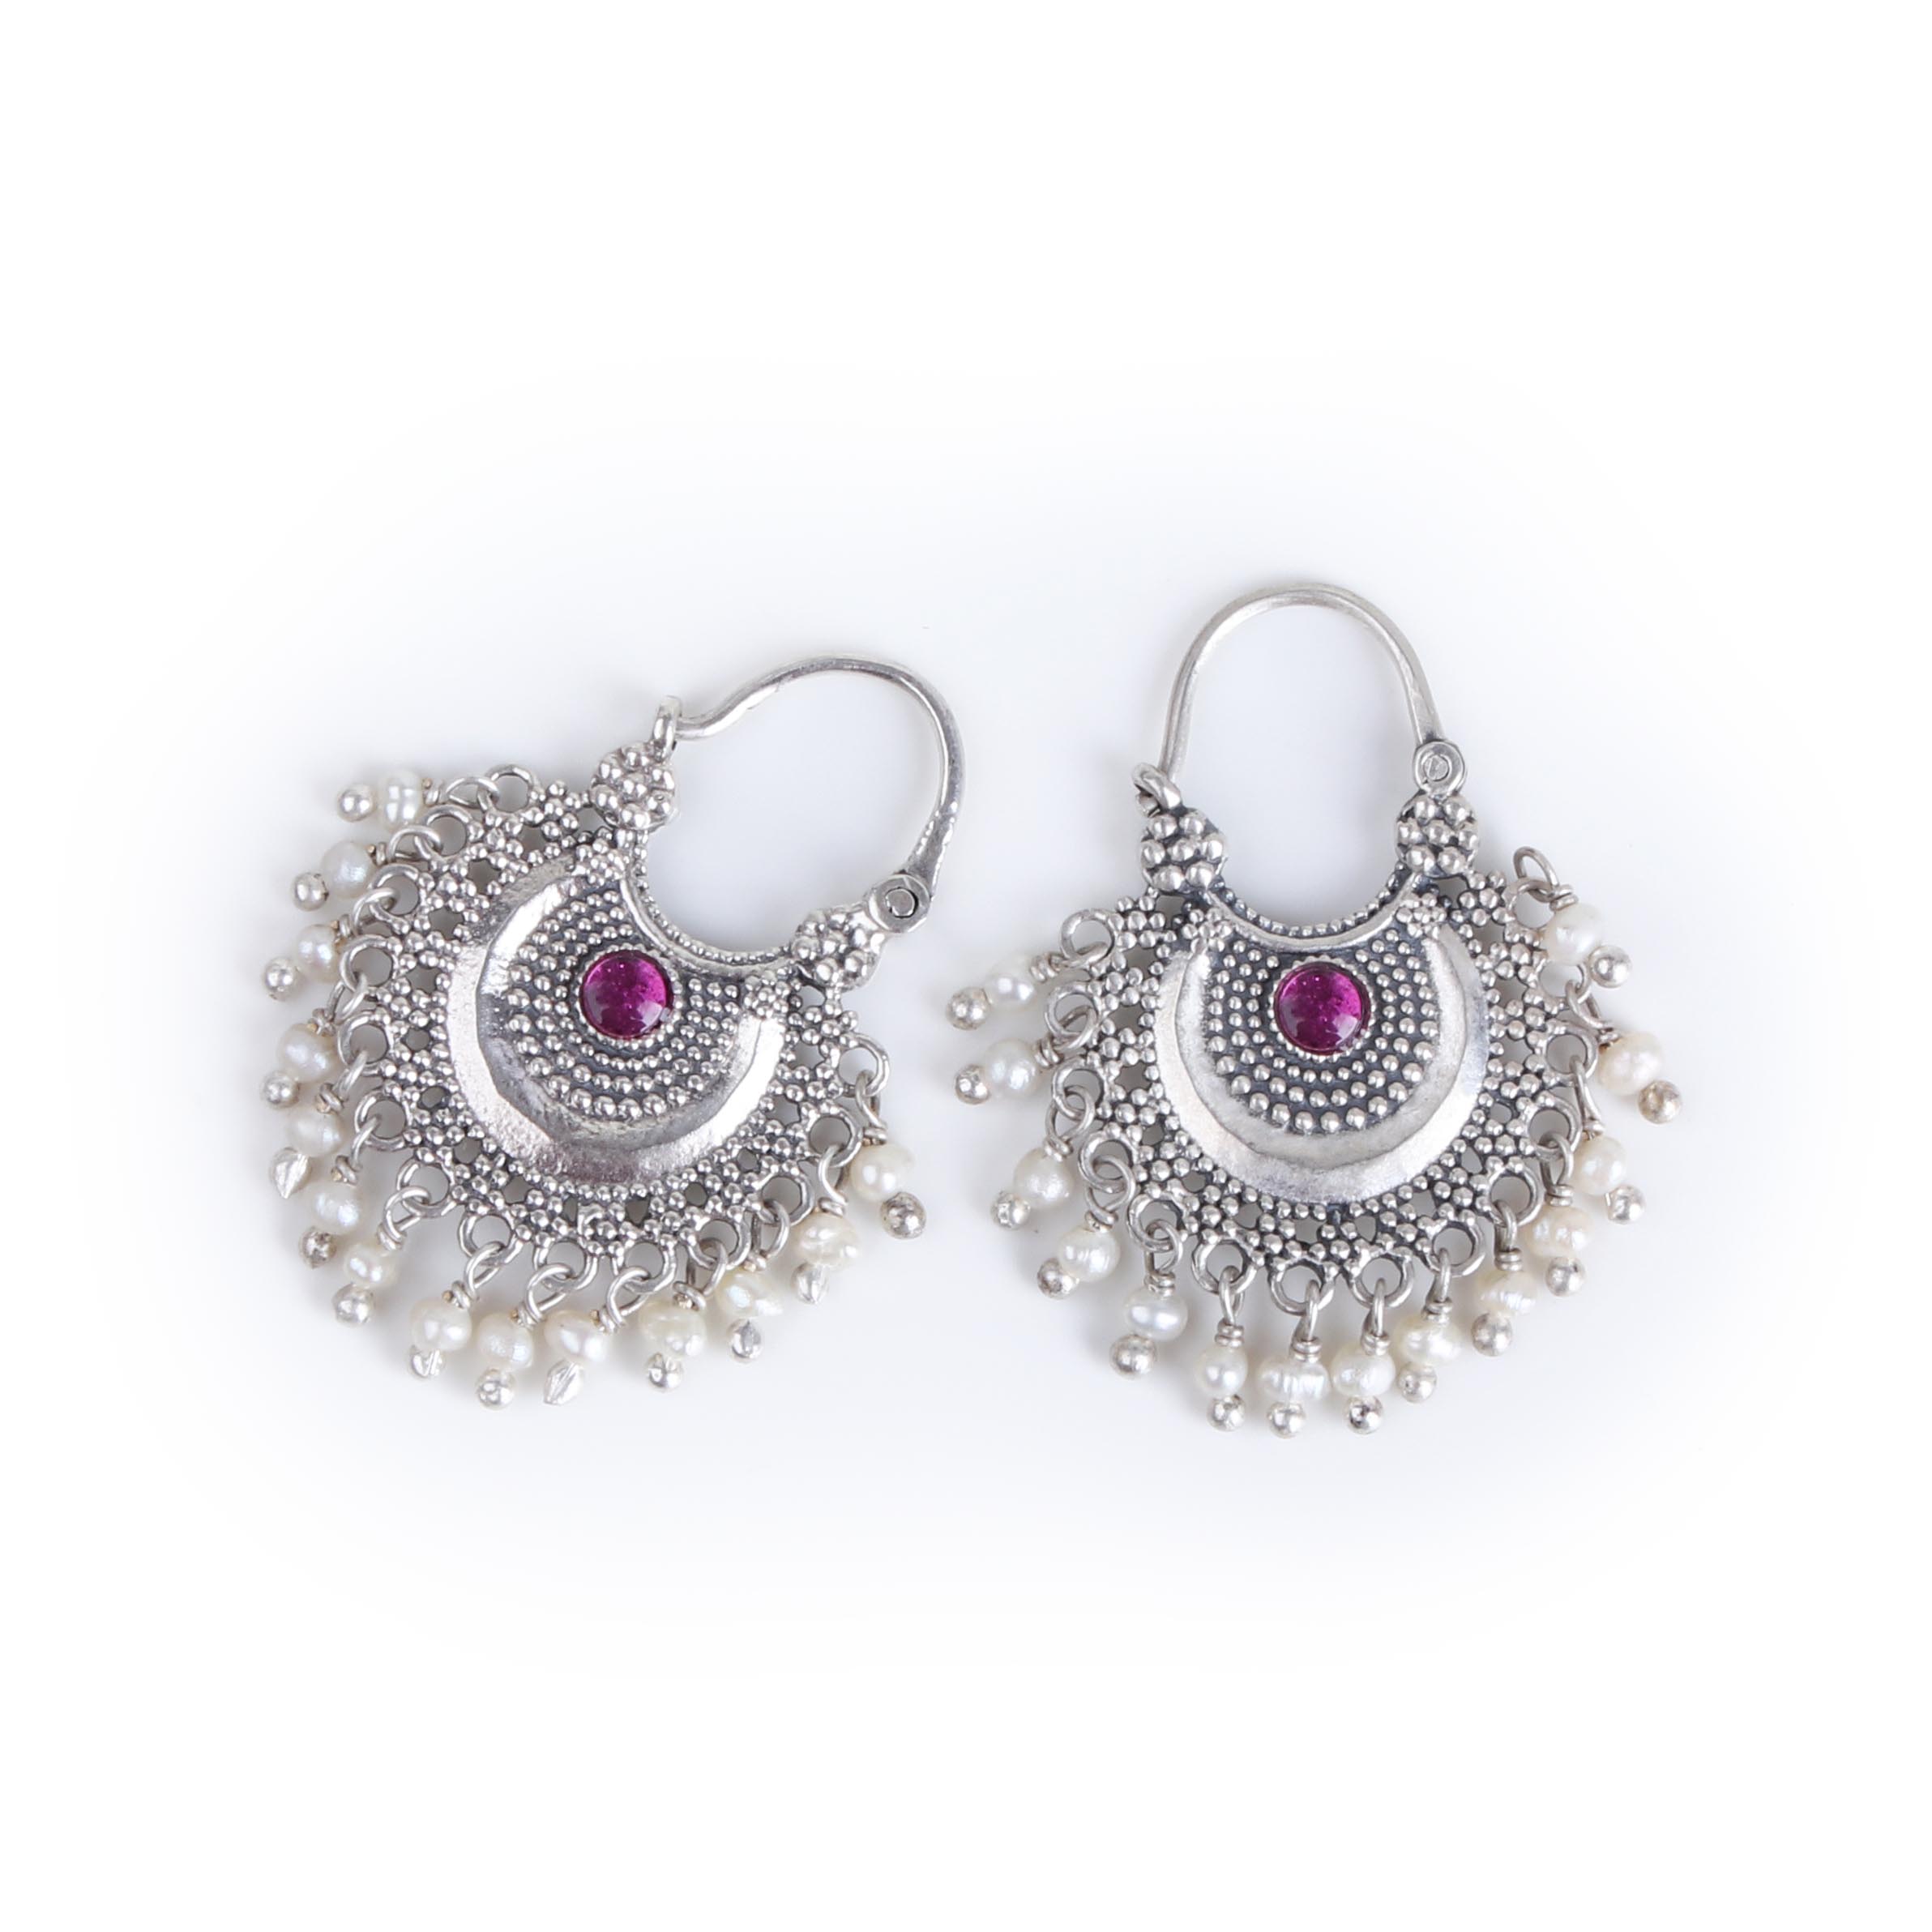 Chandbali Silver Bugadi/ Earrings (Pair, Pink) By Moha